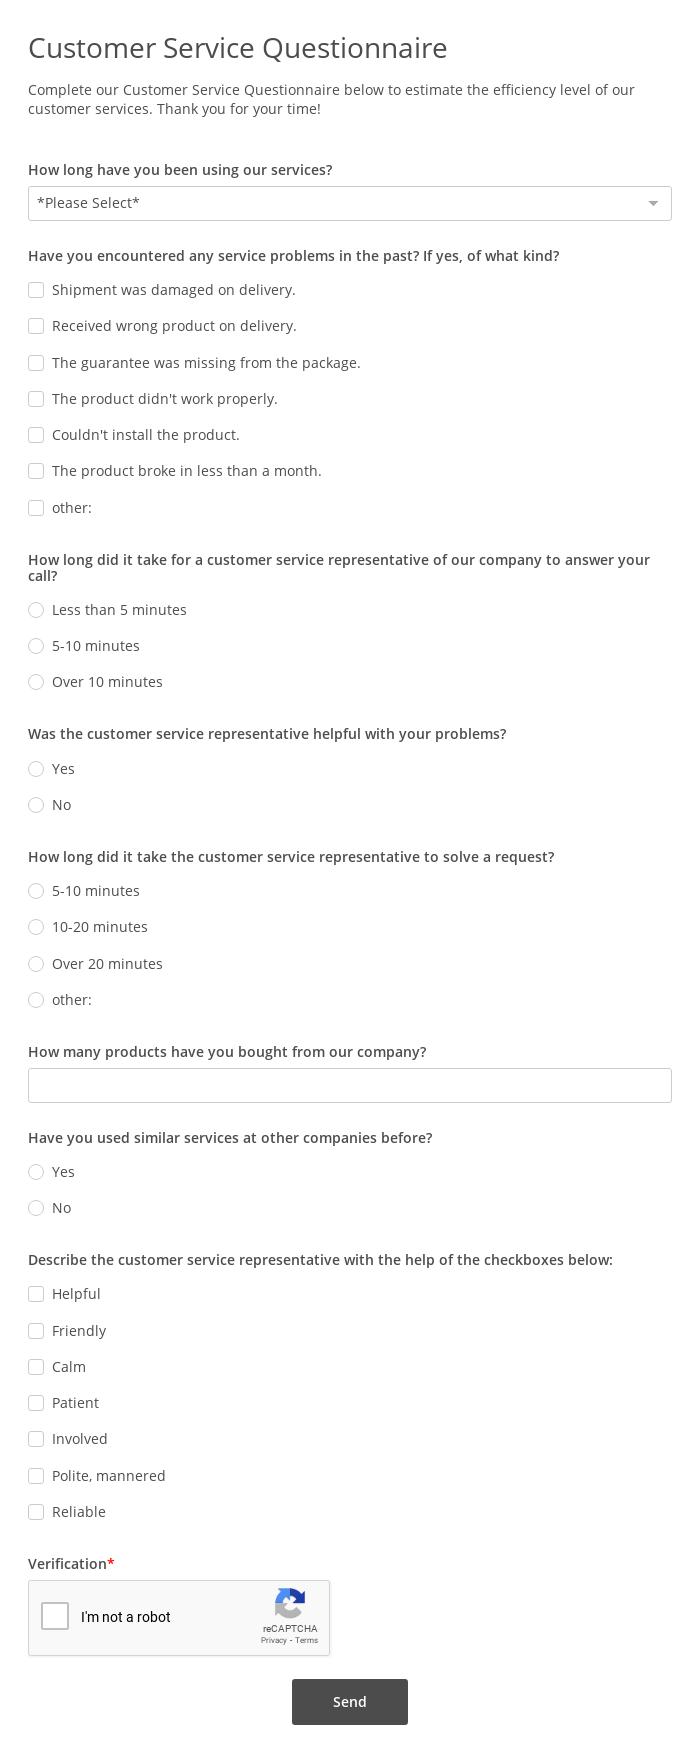 Customer Service Questionnaire